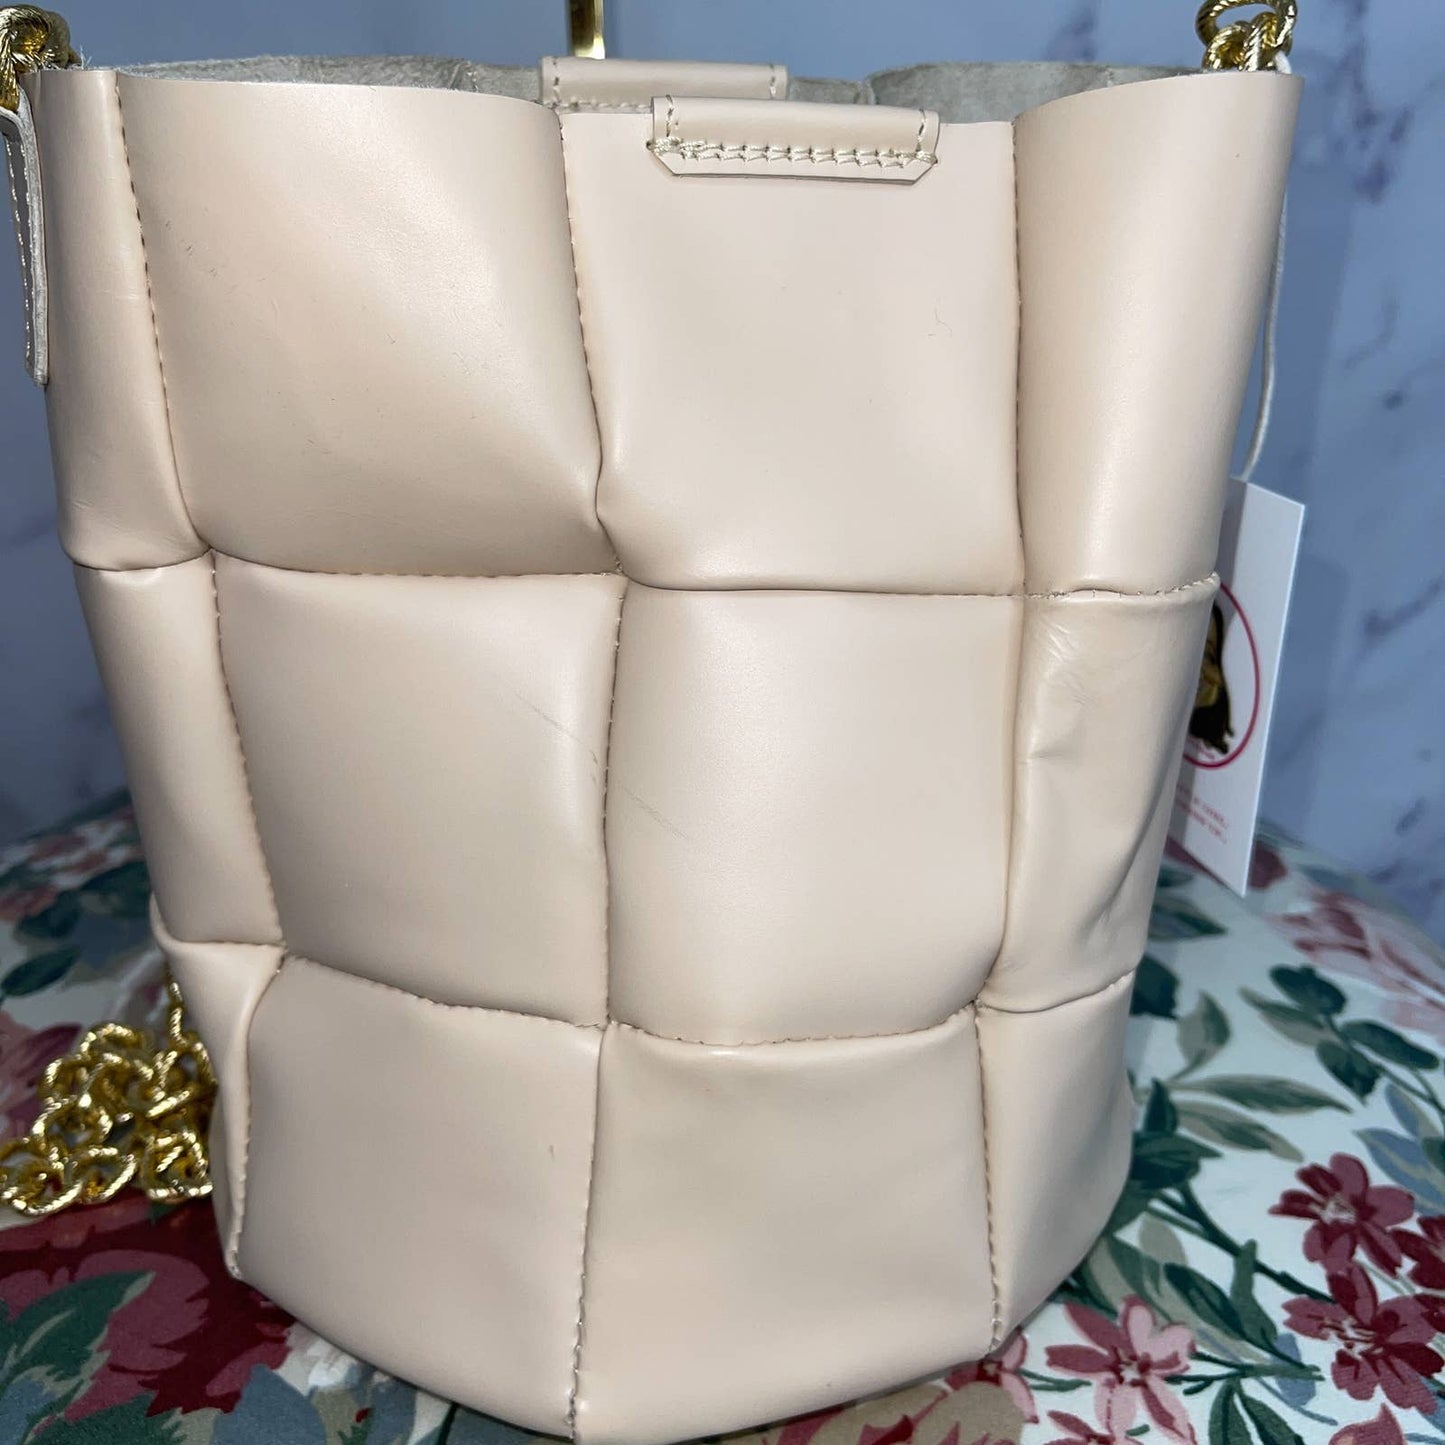 Falor Firenze | Cream Natural Leather Bucket Bag